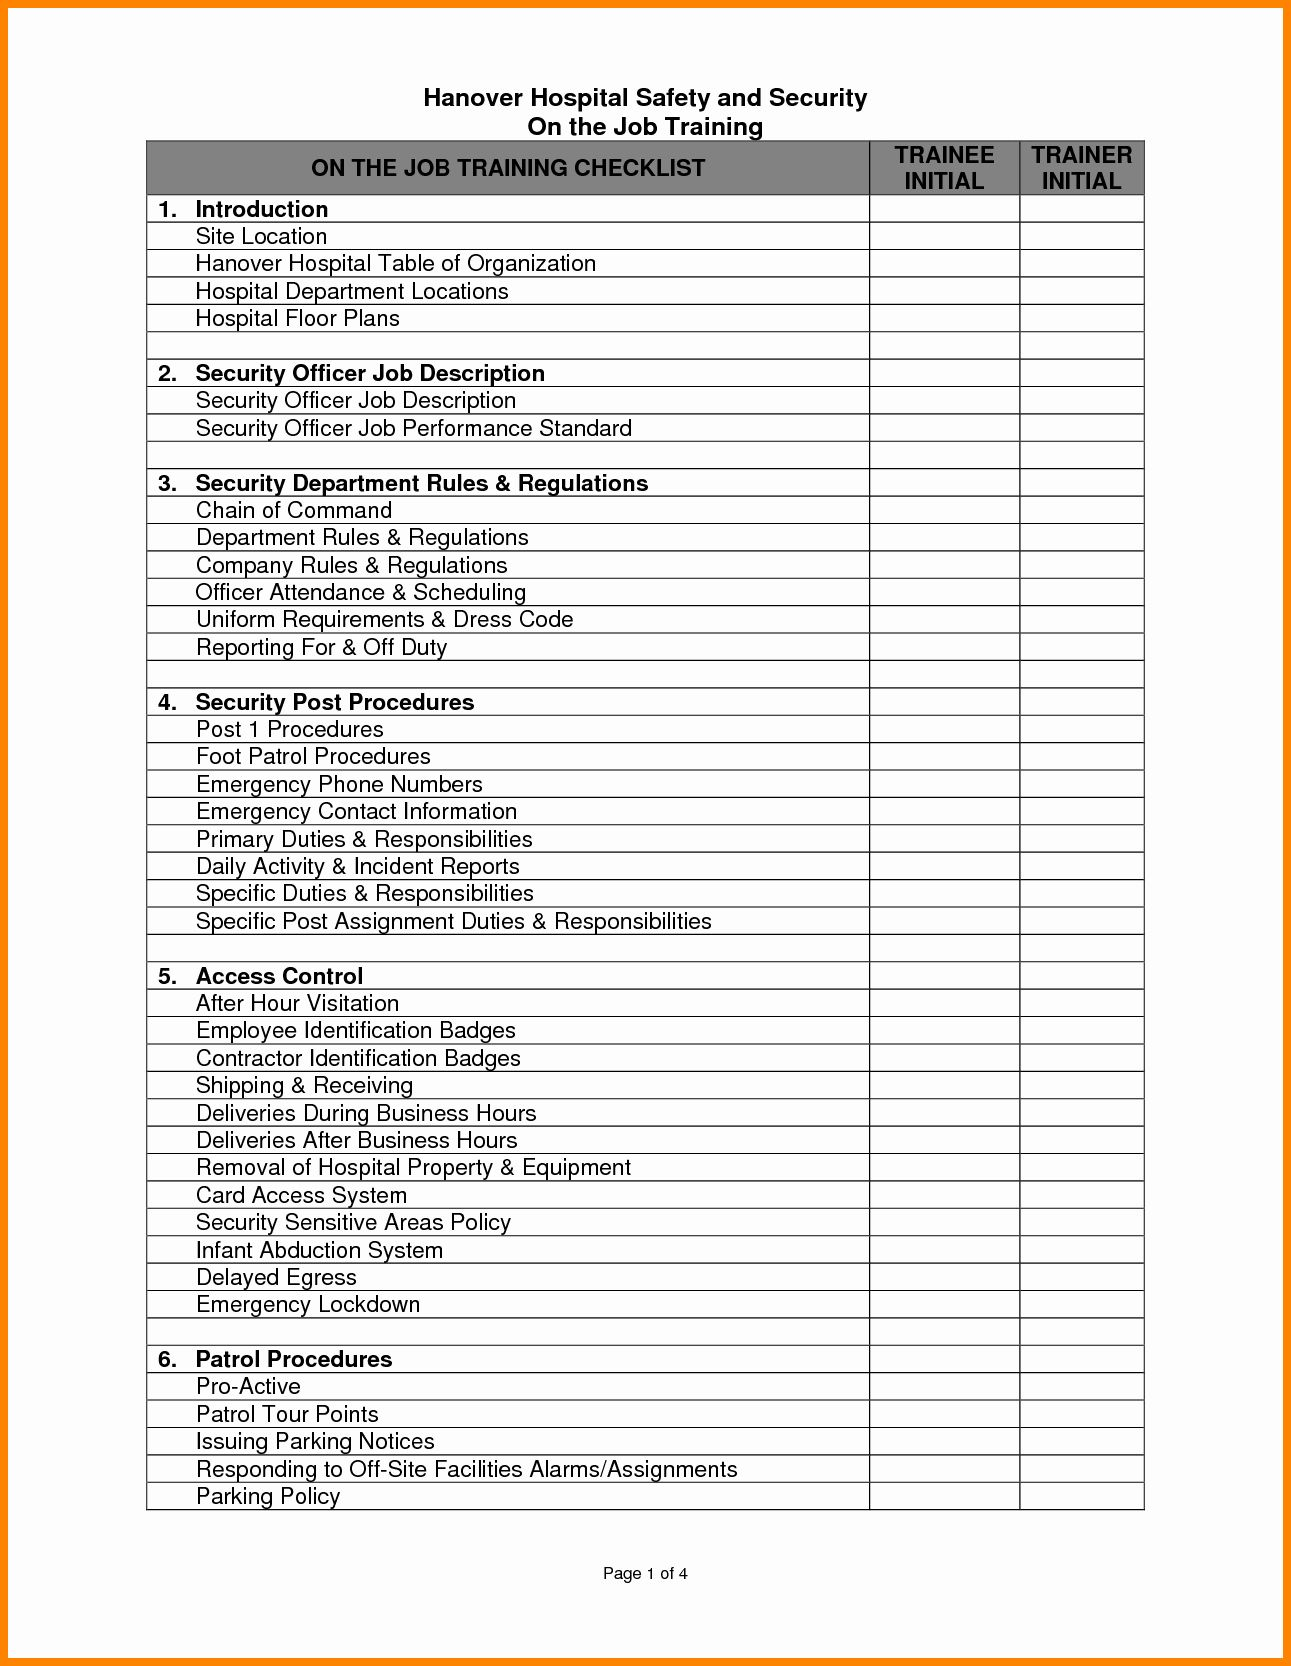 S​e​c​u​r​i​t​y​ ​p​a​t​r​o​l​ ​c​h​e​c​k​l​i​s​t​ ​t​e​m​p​l​a​t  For Security Patrol Checklist Template